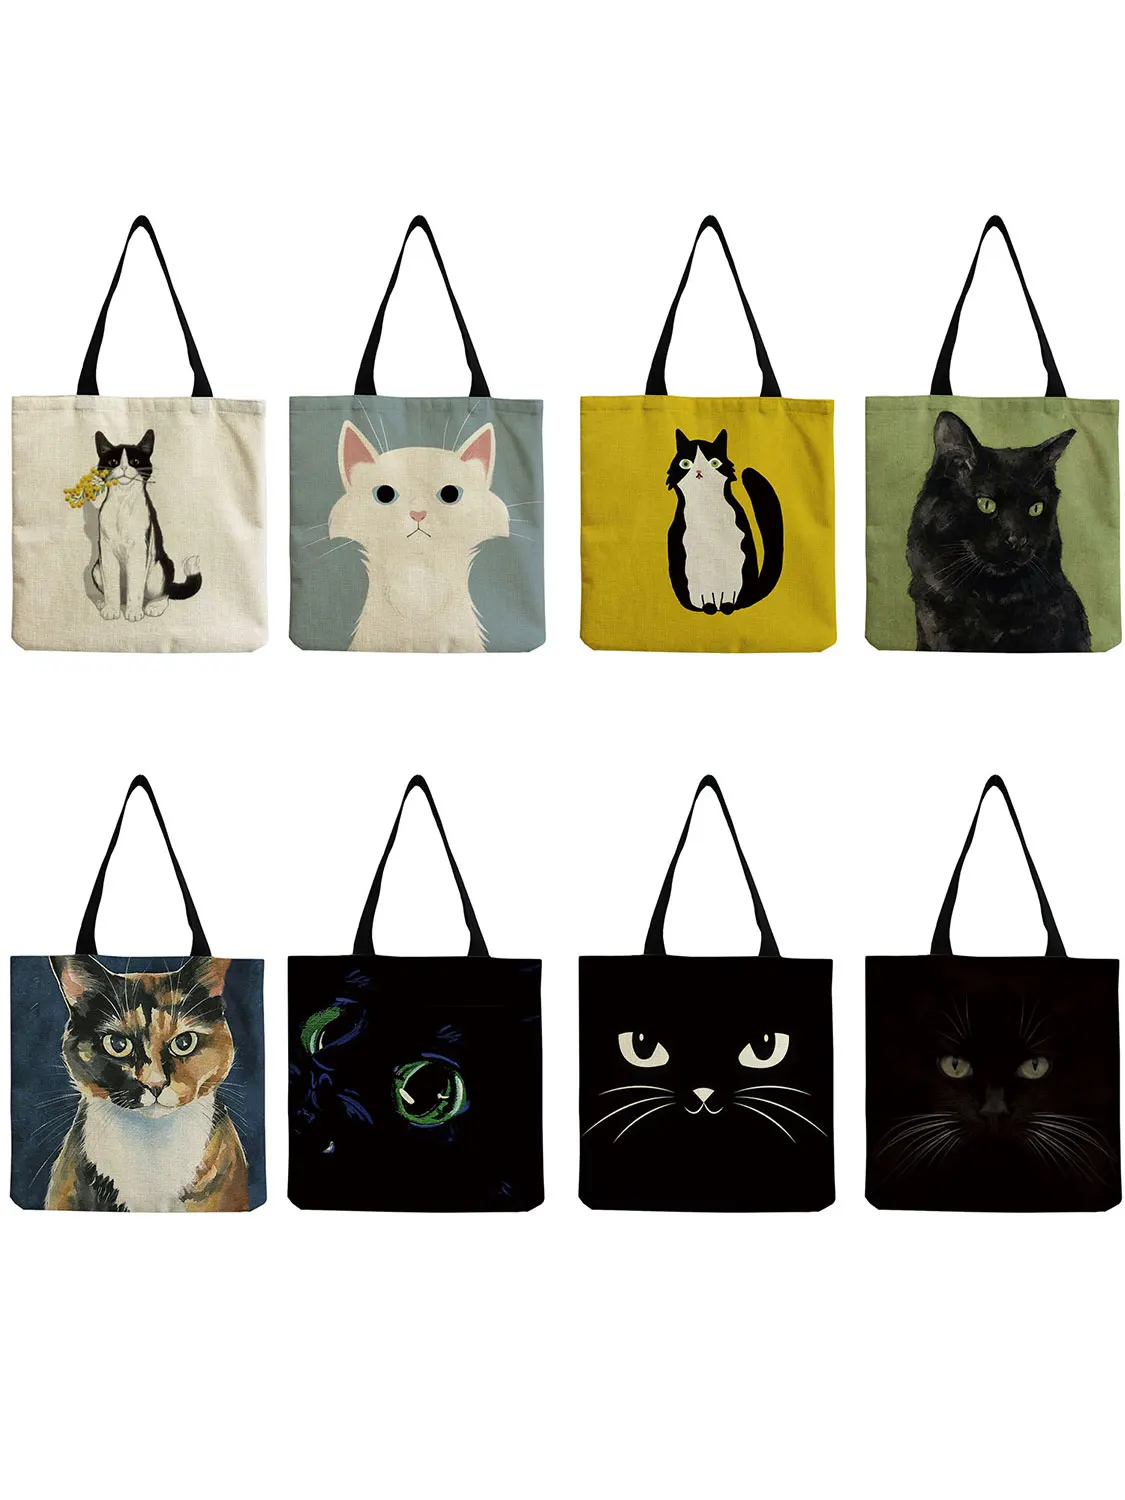 

Black Cat Print Animal Art Painting Shopping Handbag Women Shoulder Bag Eco Reusable Large Graphic Tote Shopper Bag for Boutique